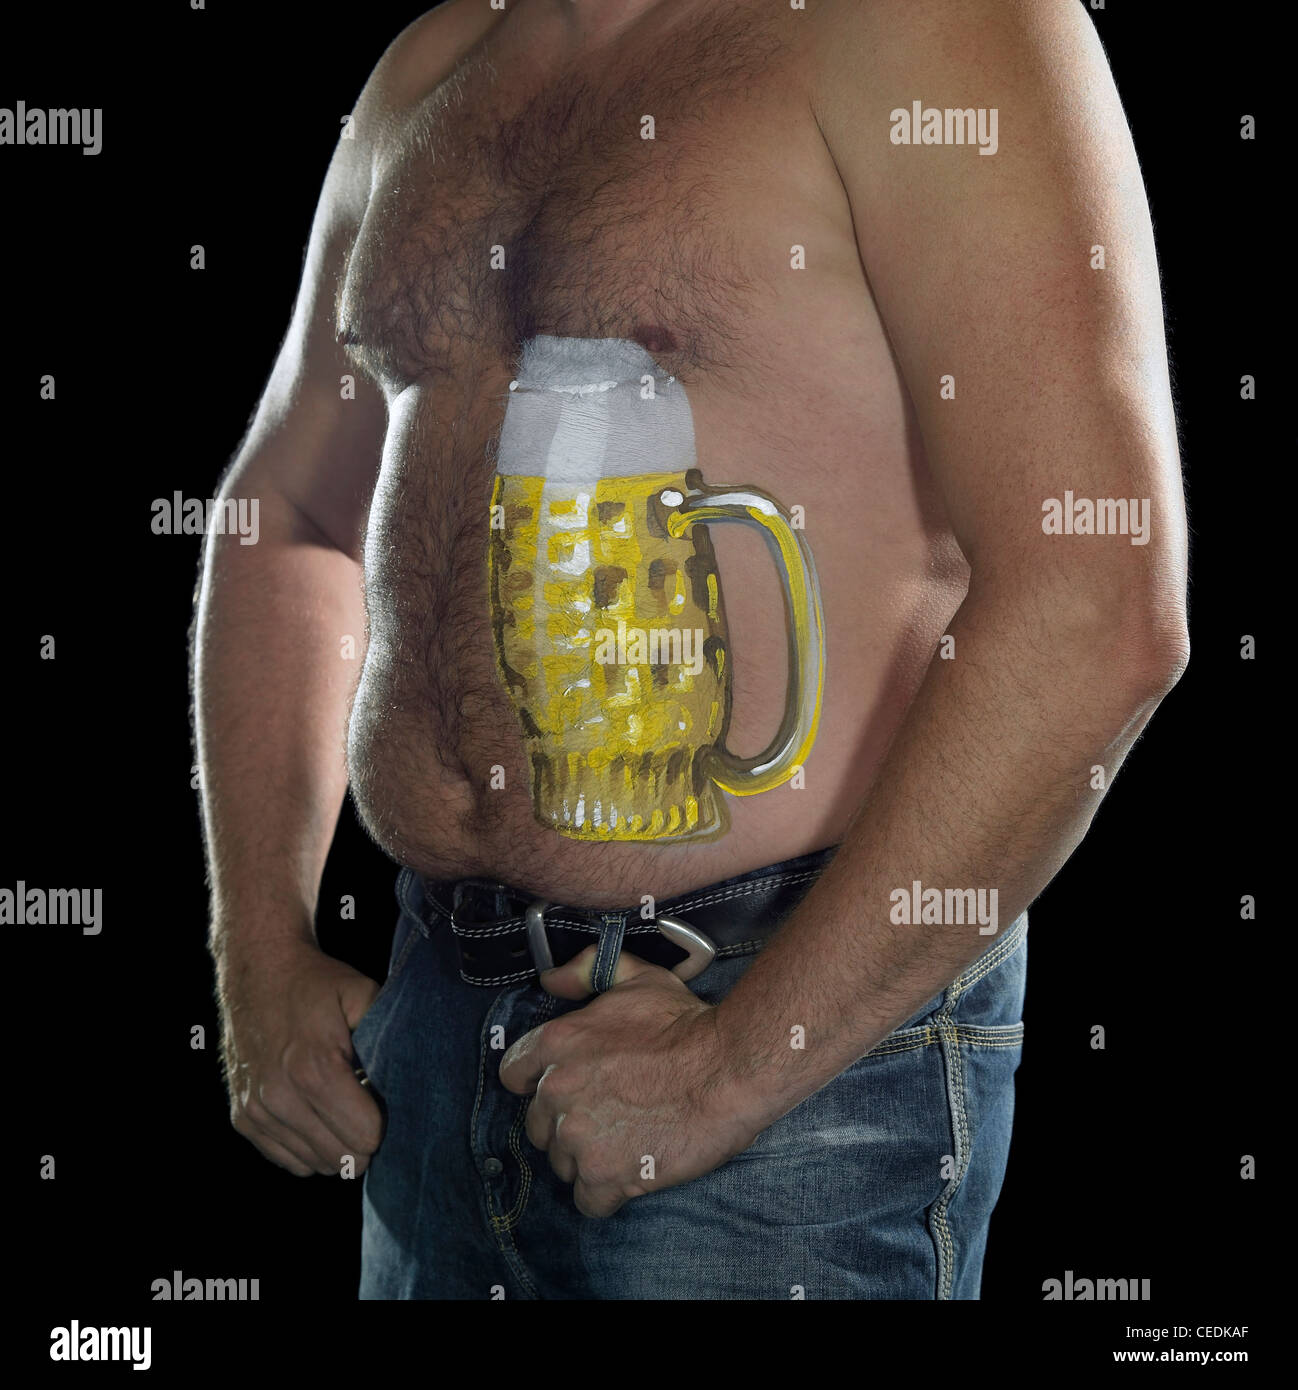 груди от пива у мужчин фото 33